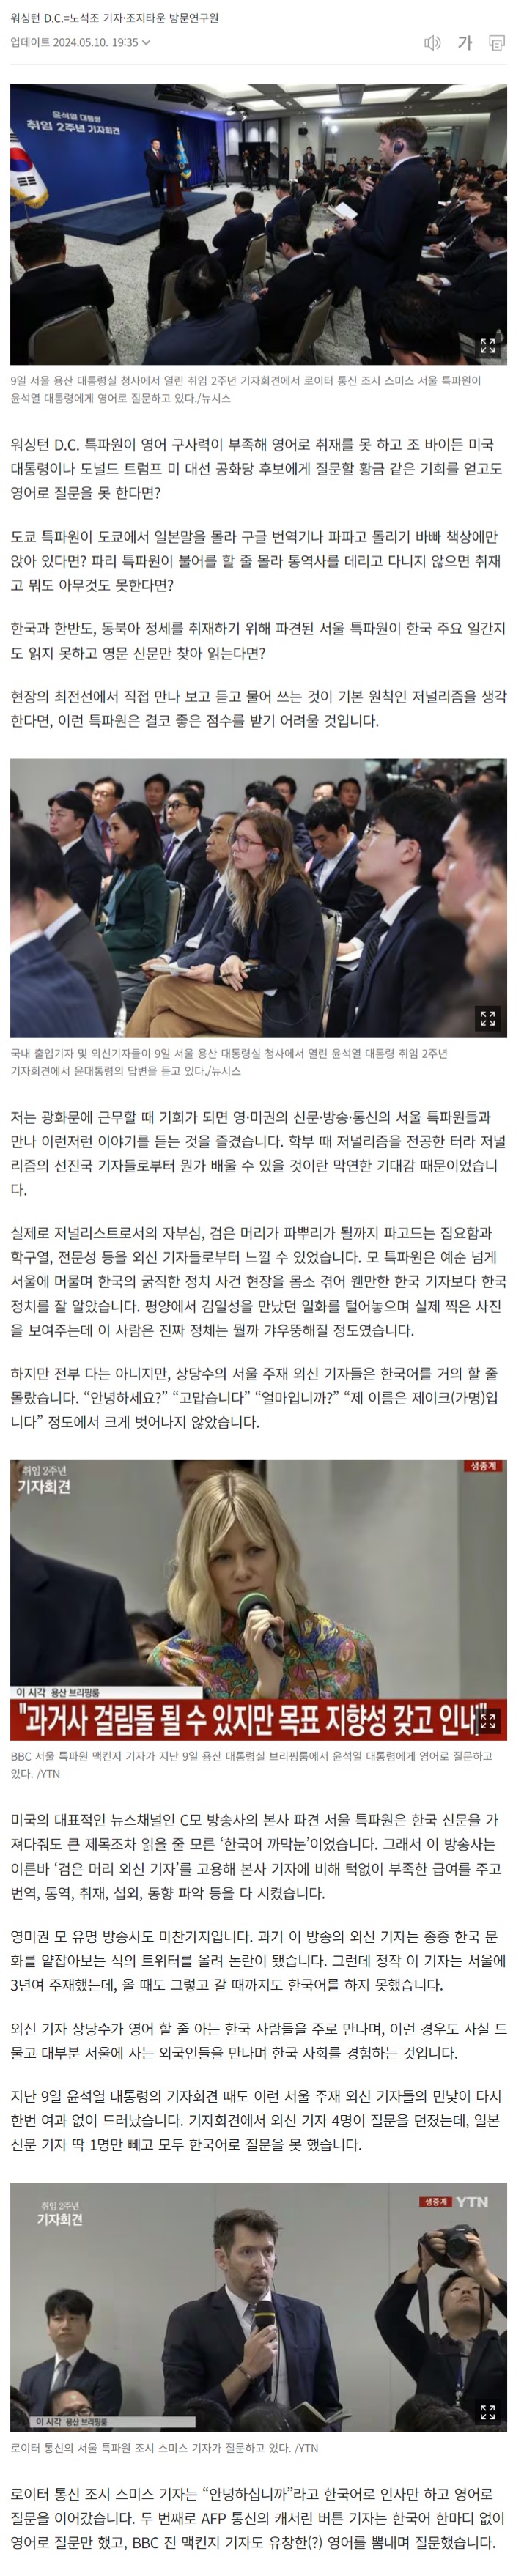 FireShot Capture 1535 - 尹에 “안녕하세요” 인사만.한국말 못하는 서울 특파원들 - www.chosun.com.jpg